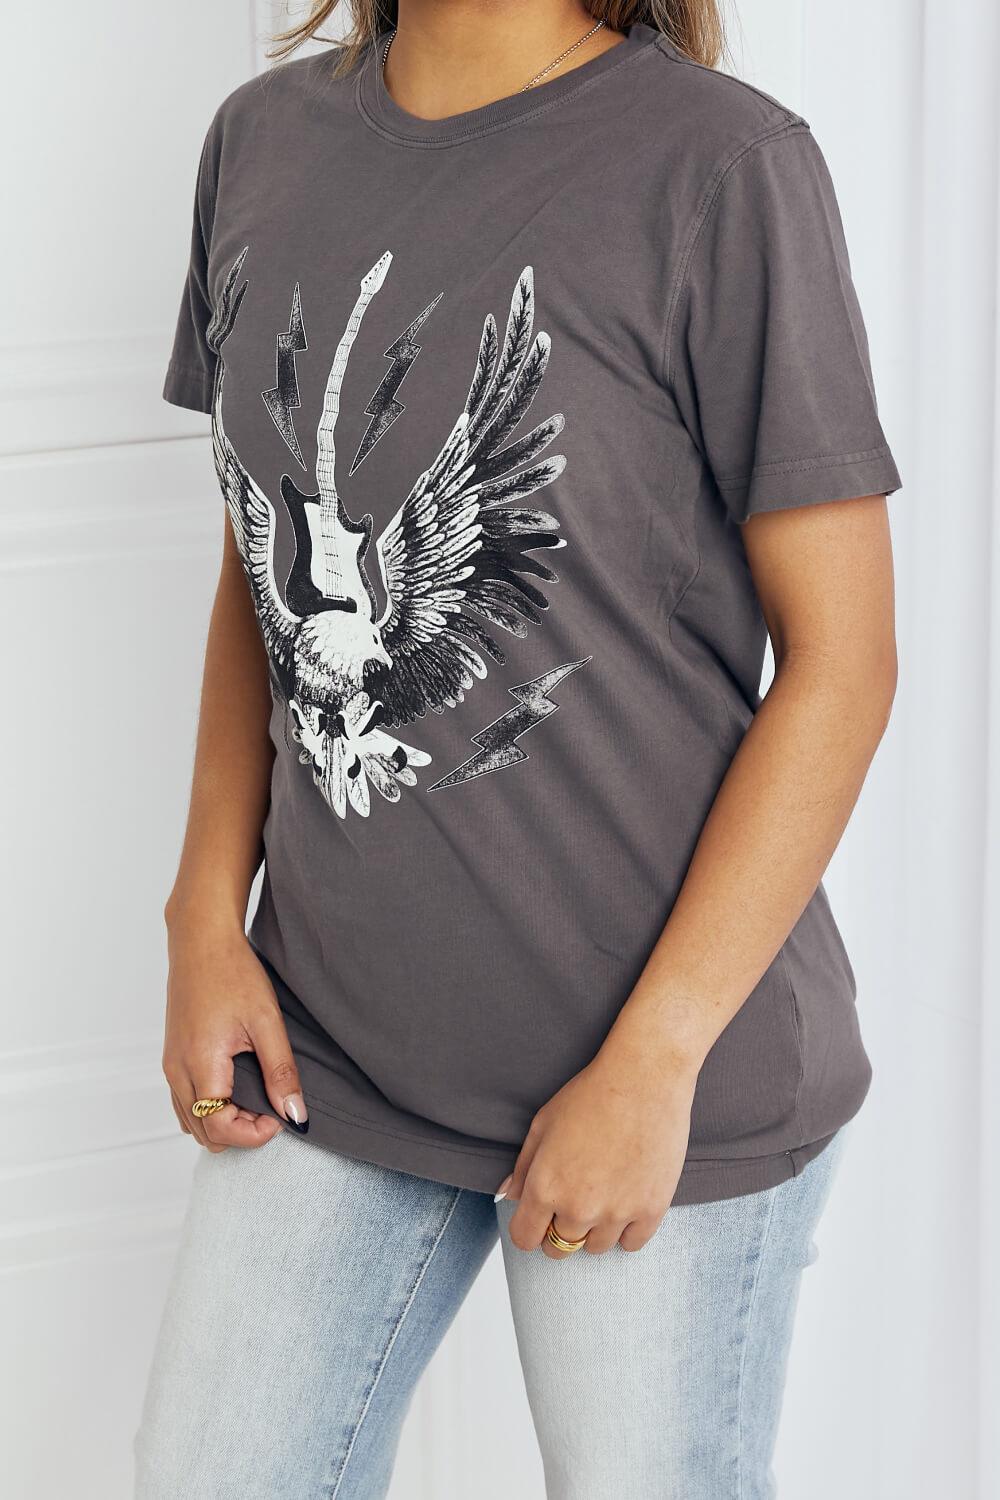 mineB Full Size Eagle Graphic Tee Shirt - La Pink